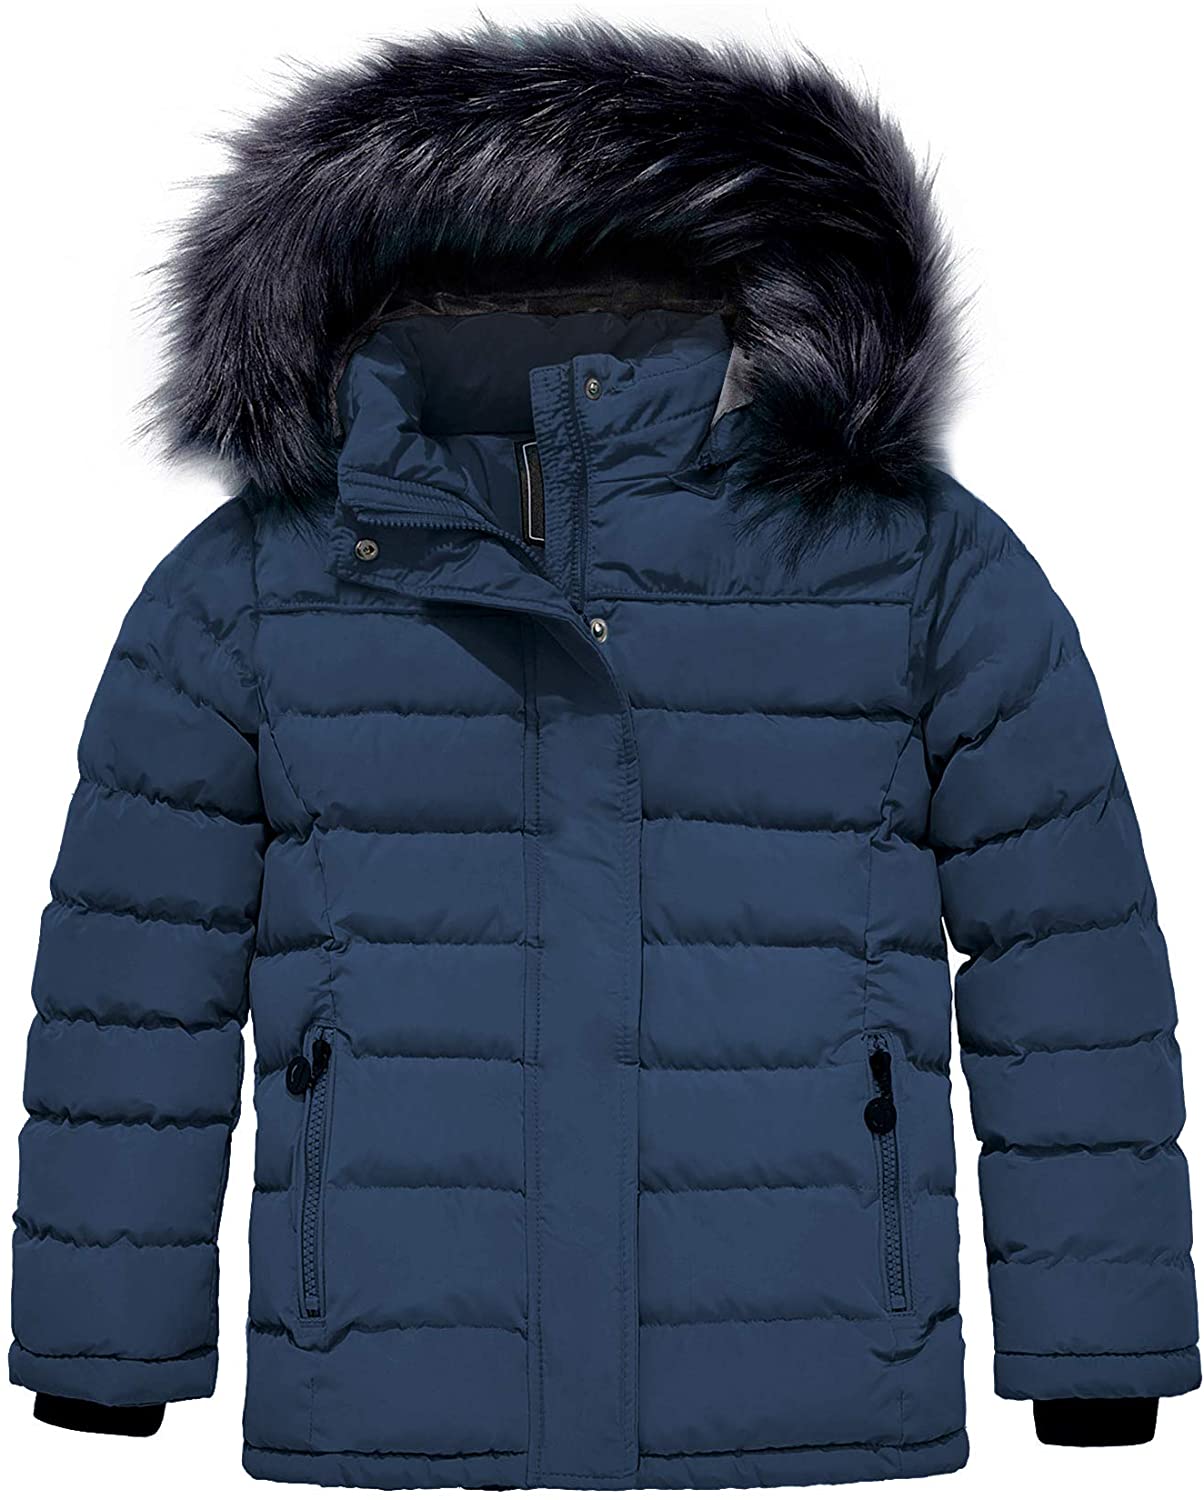 ZSHOW Girl's Snow Jacket Windproof Ski Coat with Hood Breathable  Windbreaker Rain Jacket Blue 14/16